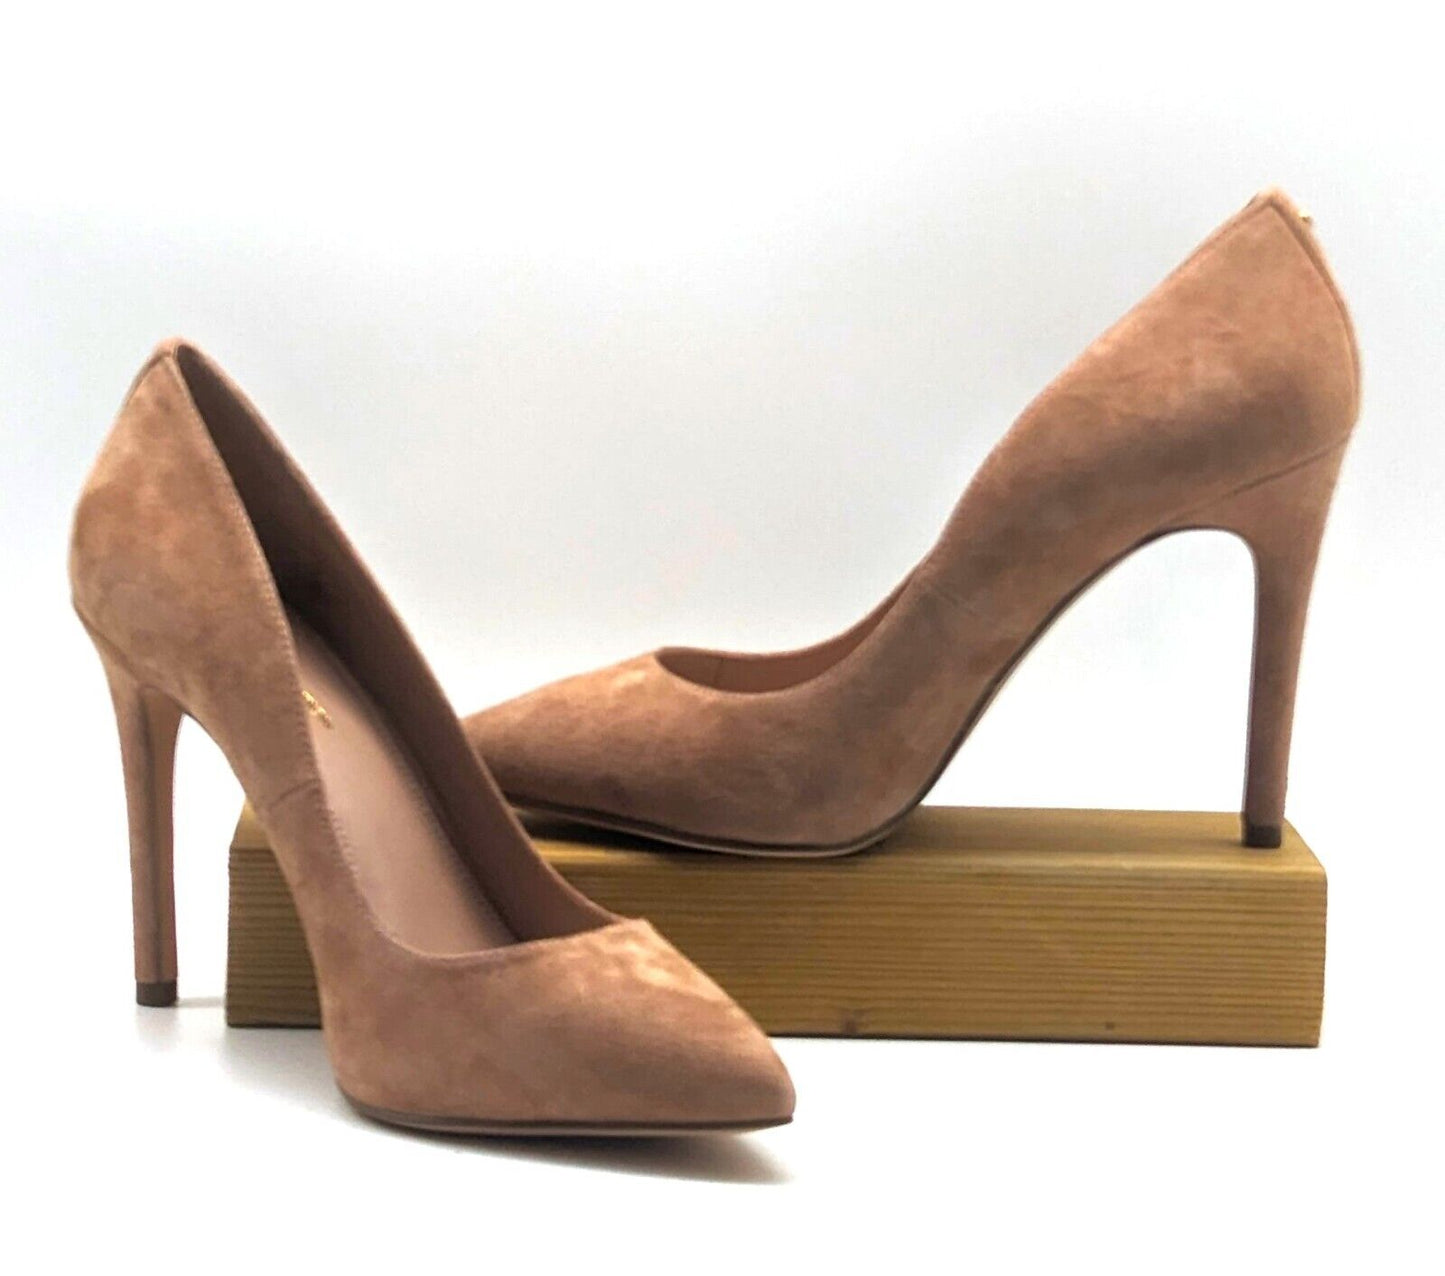 BCBGeneration Heidi Shoe Make Up Suede RRP £105